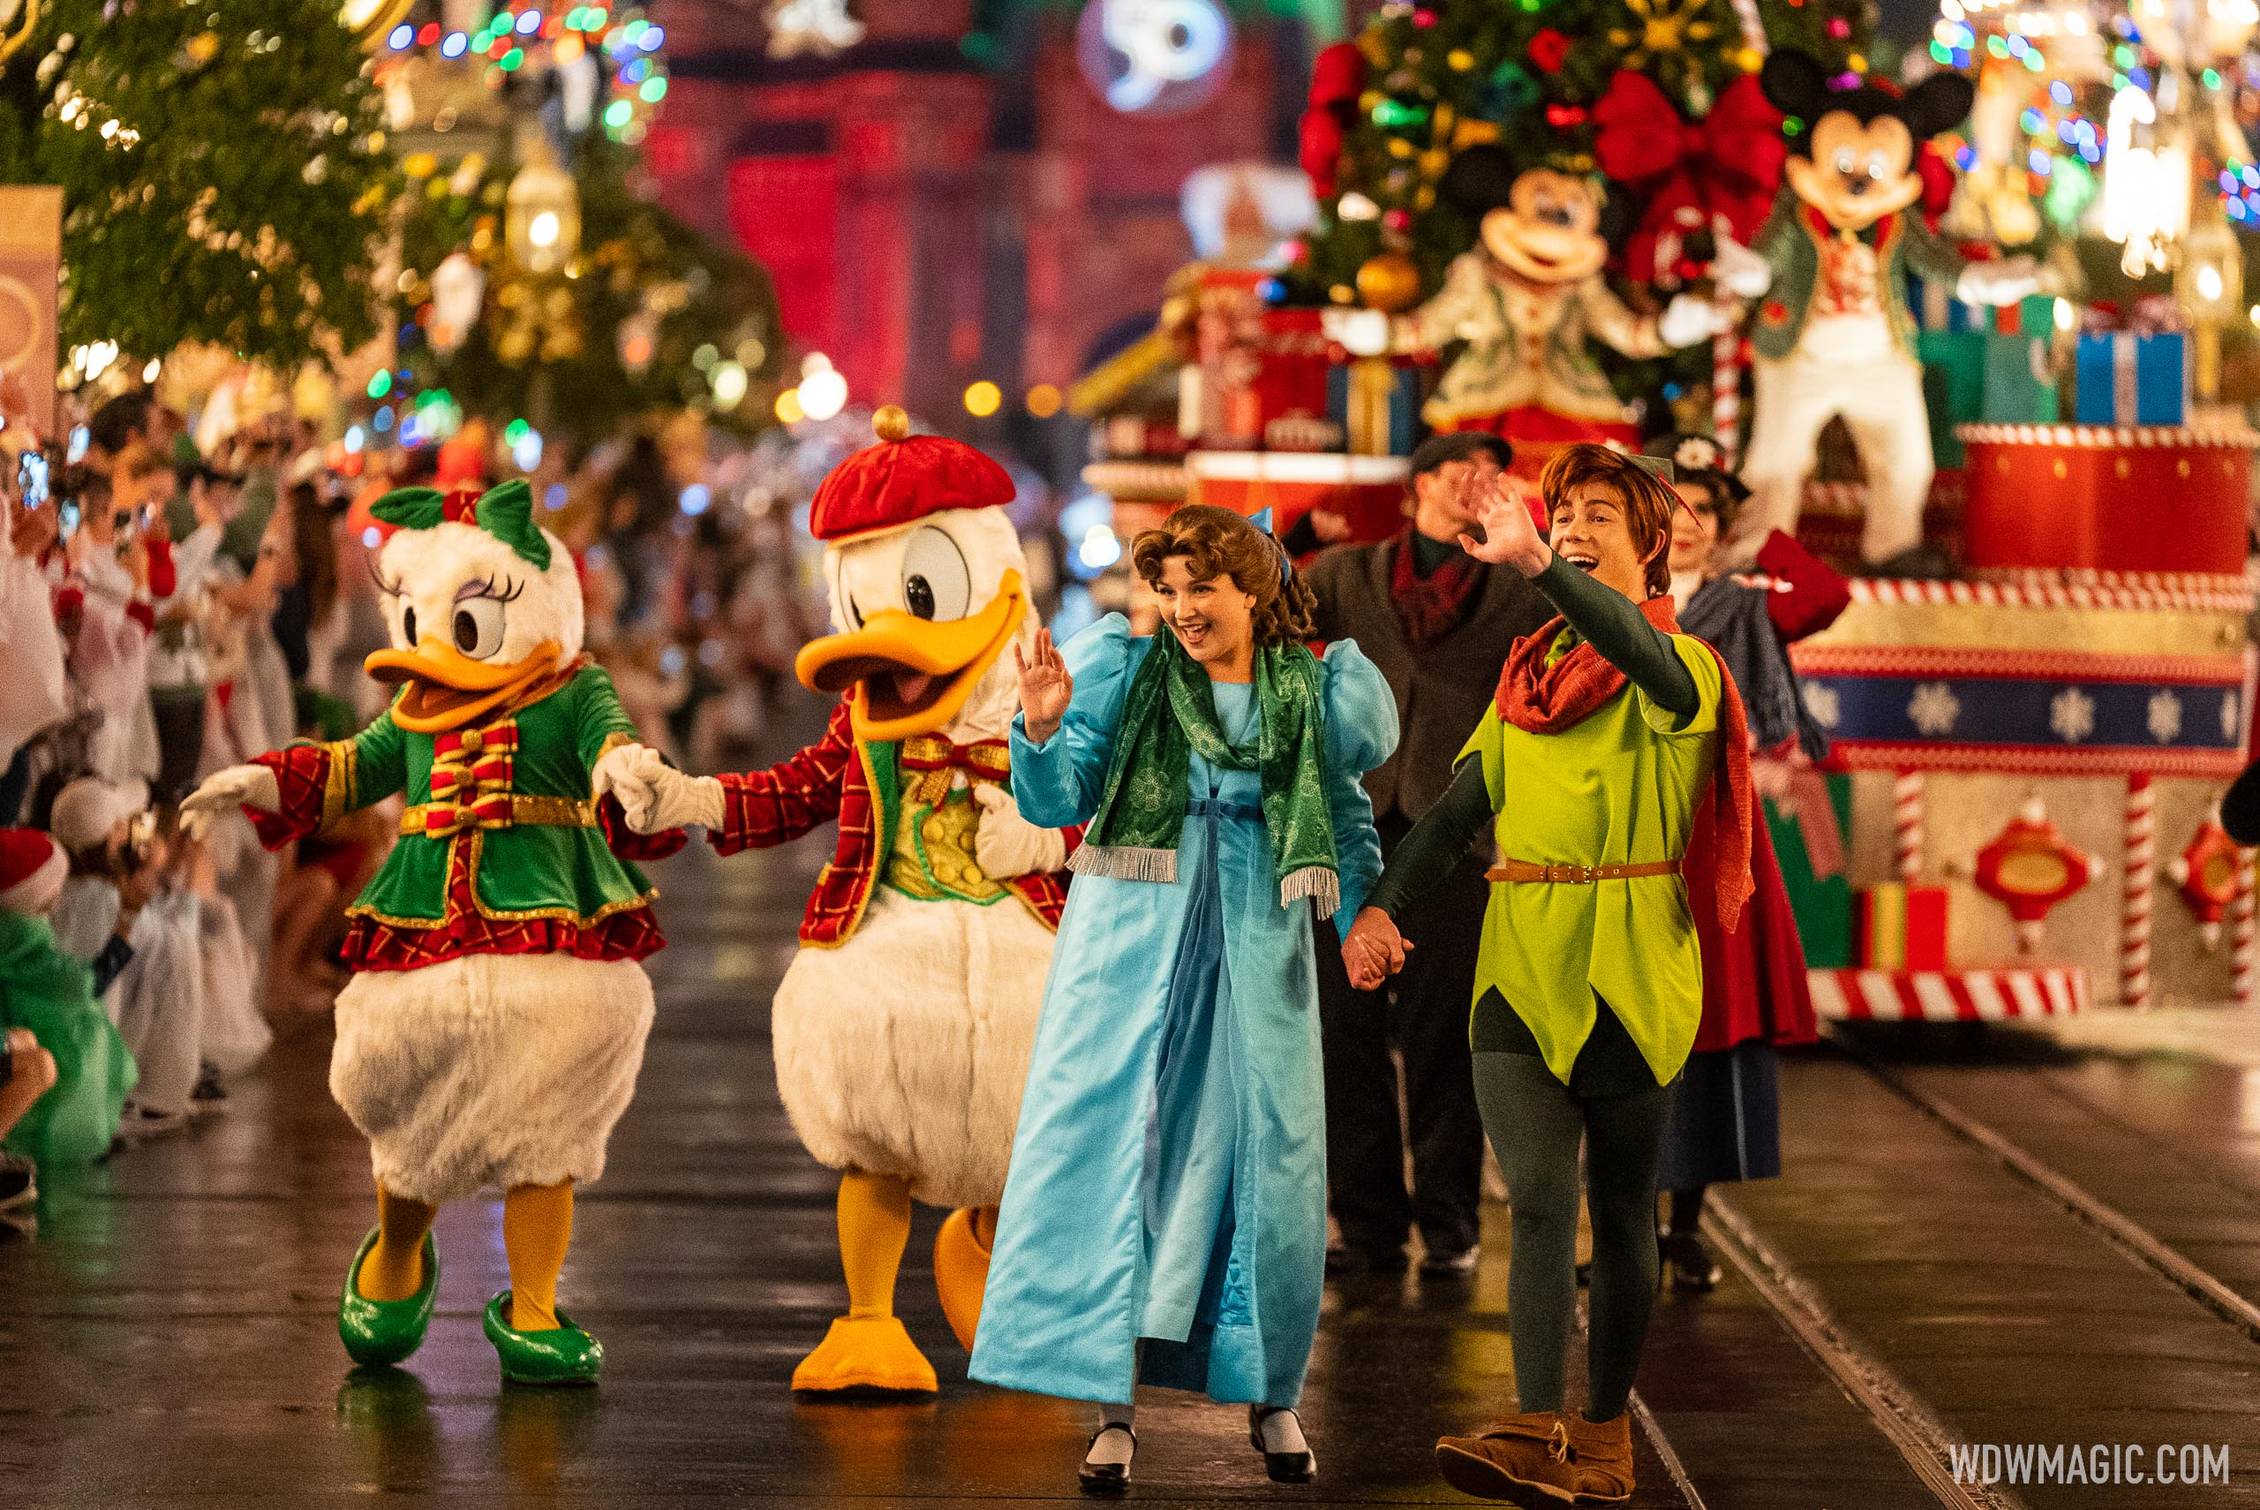 Mickeys-Once-Upon-a-Christmastime-Parade_Full_49253.jpg